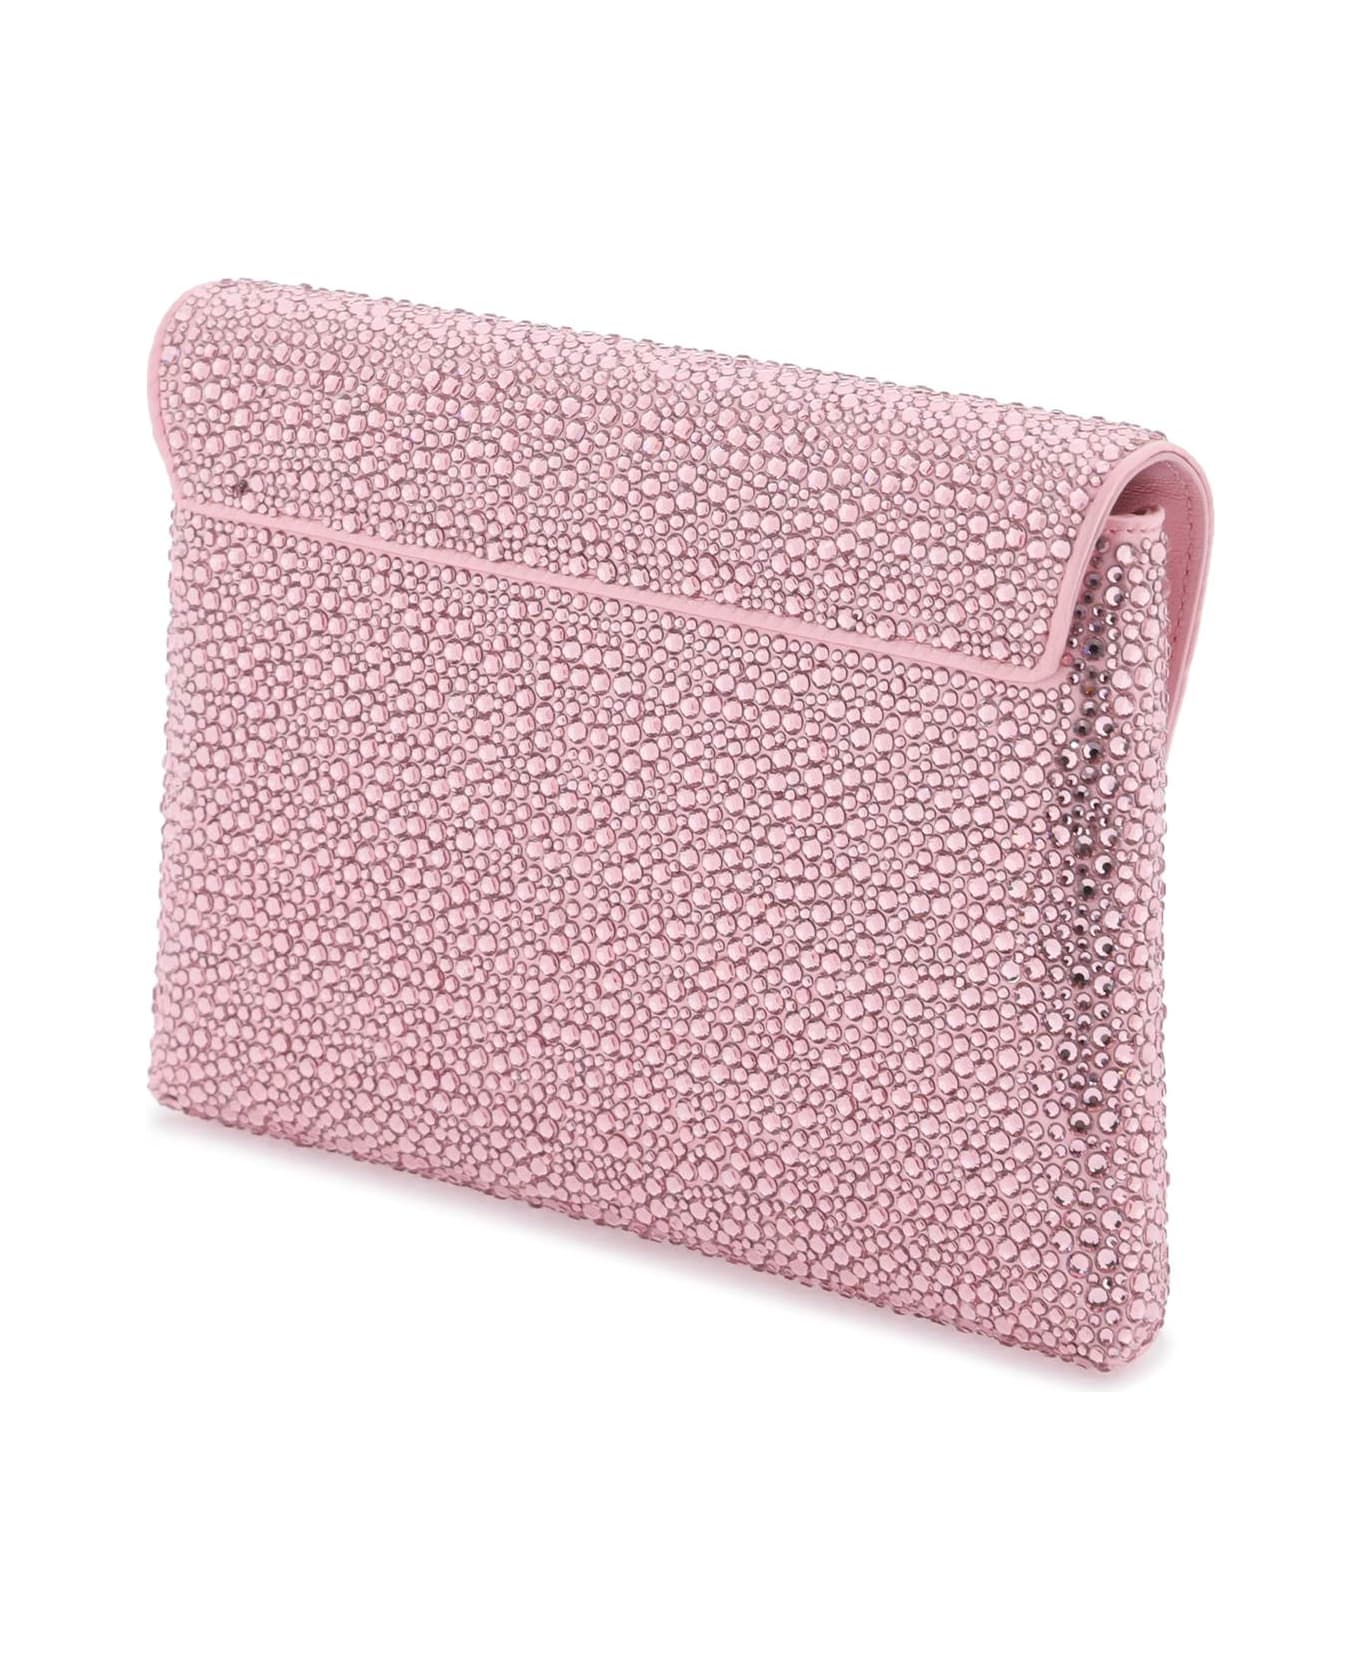 Versace La Medusa Envelope Clutch With Crystals - PALE PINK VERSACE GOLD (Pink)